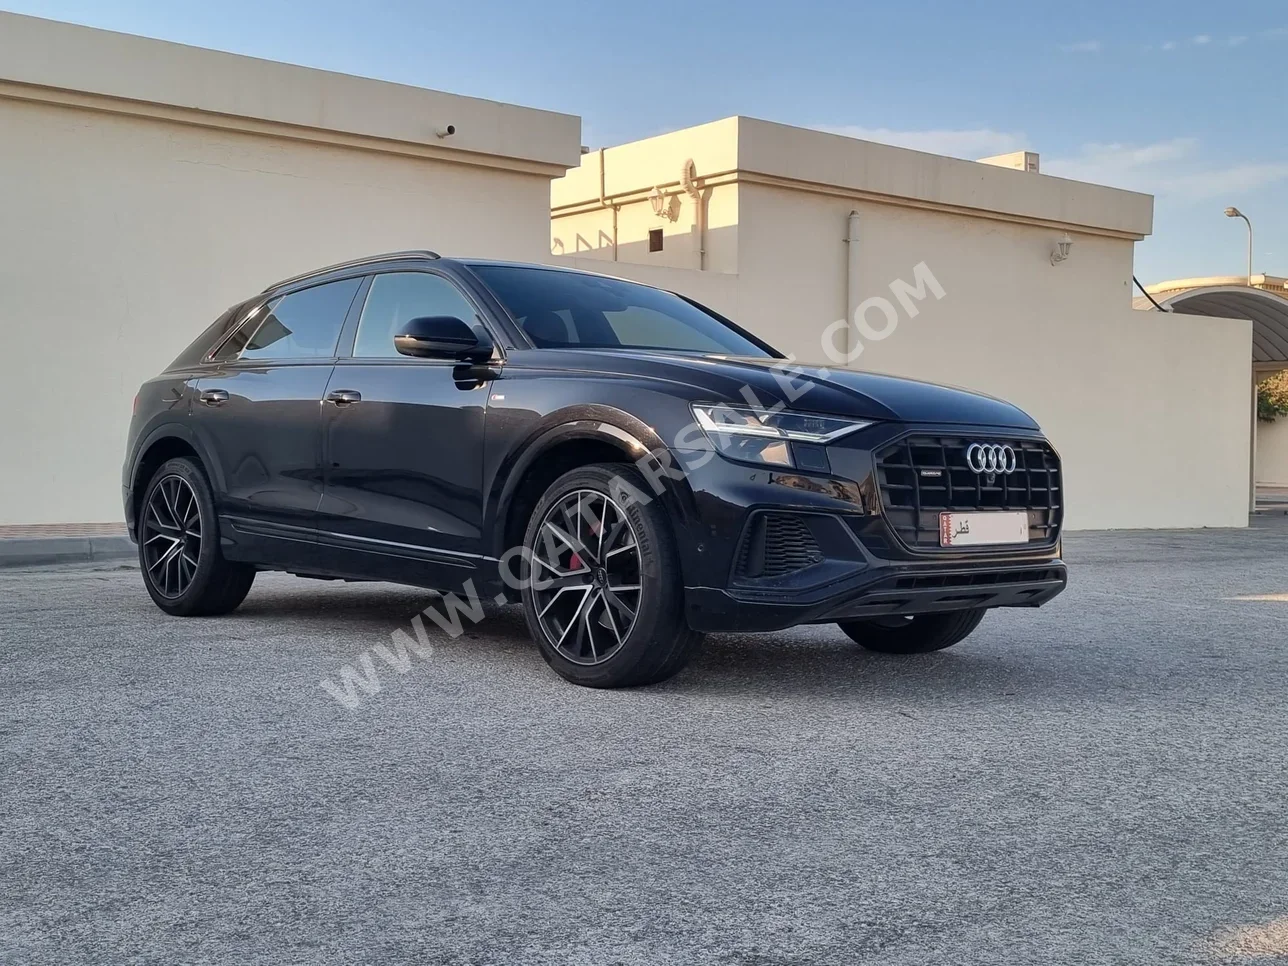 Audi  Q8  2019  Automatic  45,000 Km  6 Cylinder  Four Wheel Drive (4WD)  SUV  Black